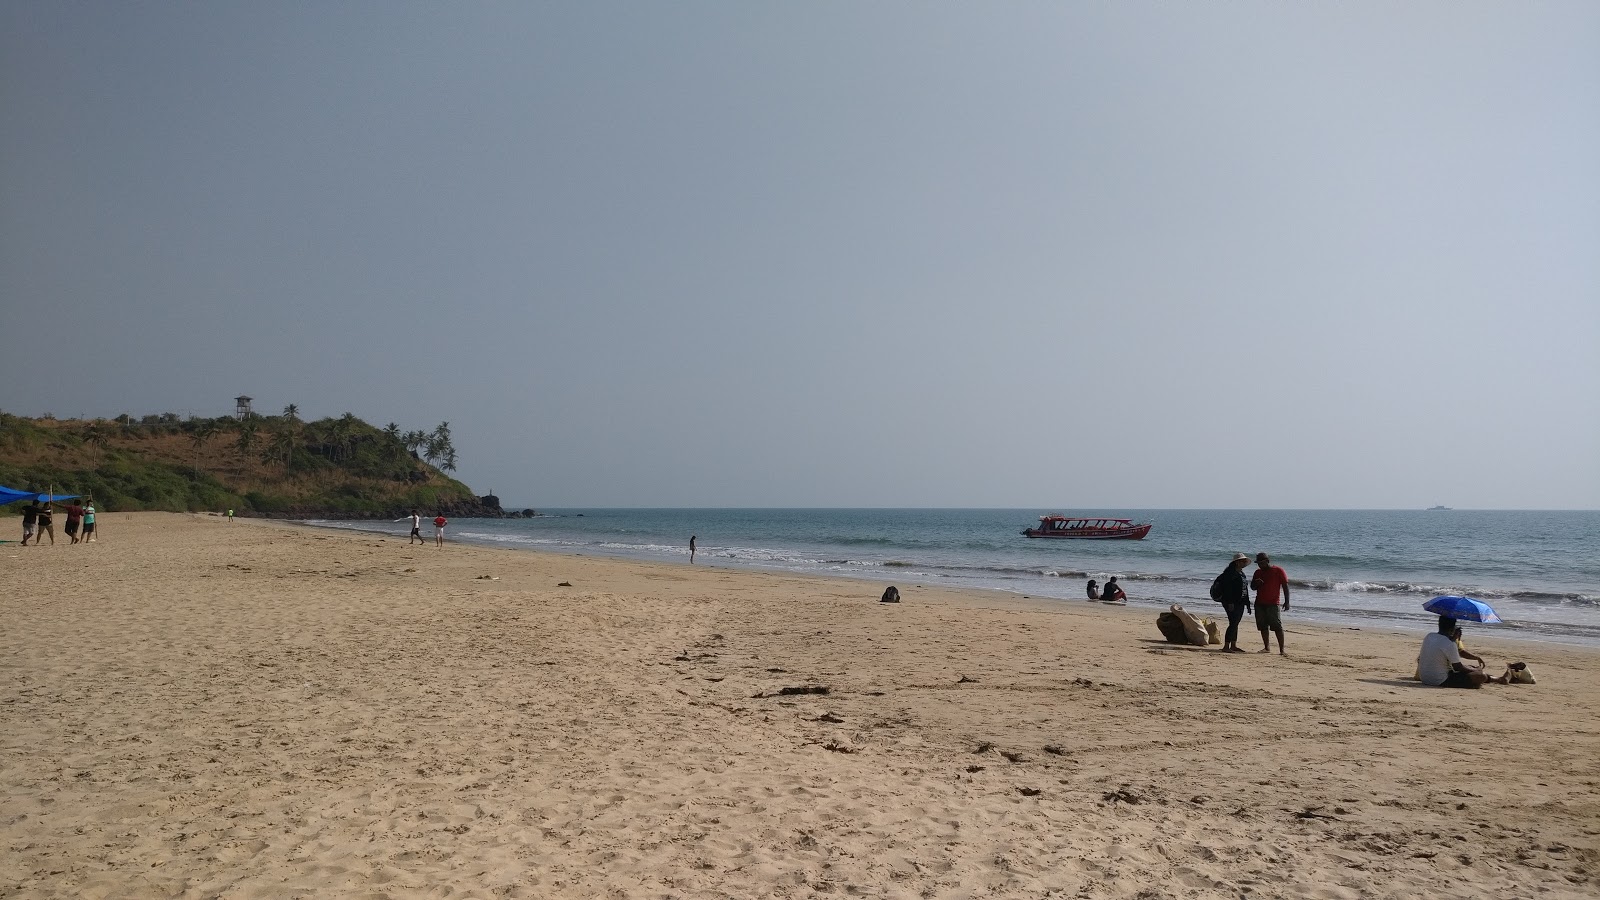 Foto di Hansa Beach ubicato in zona naturale